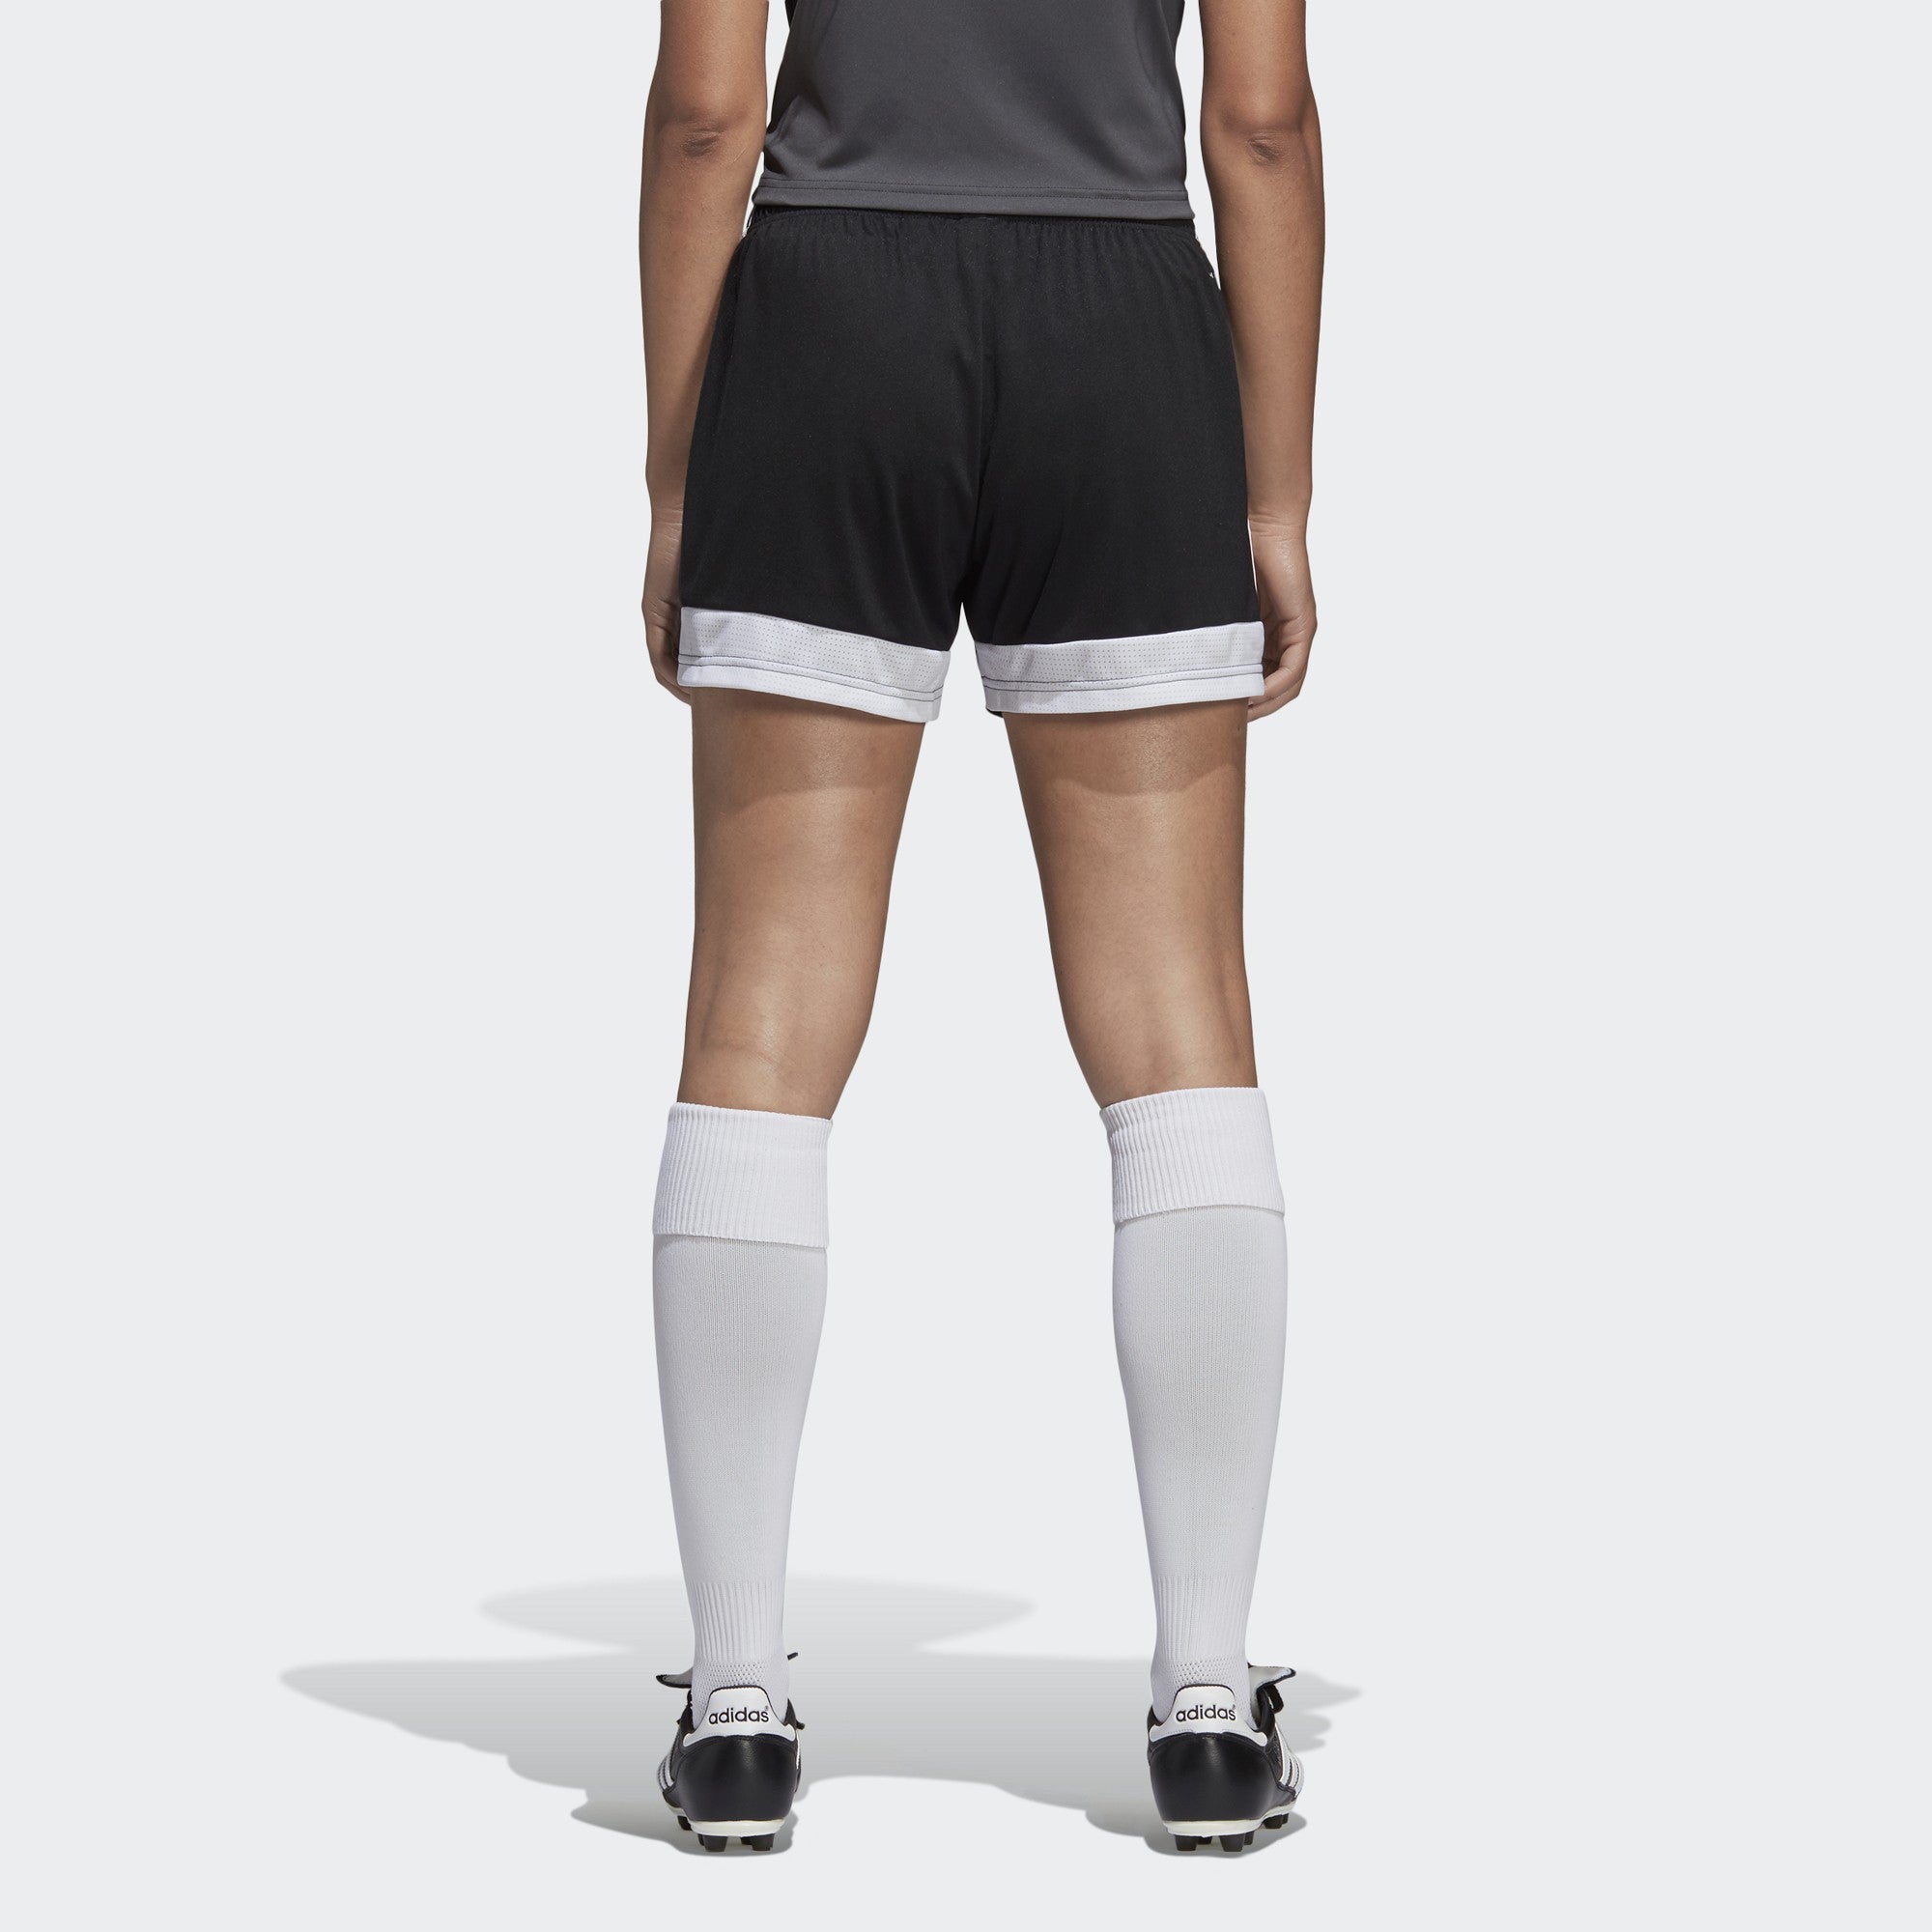 adidas Women Tastigo 19 Shorts - Black/White